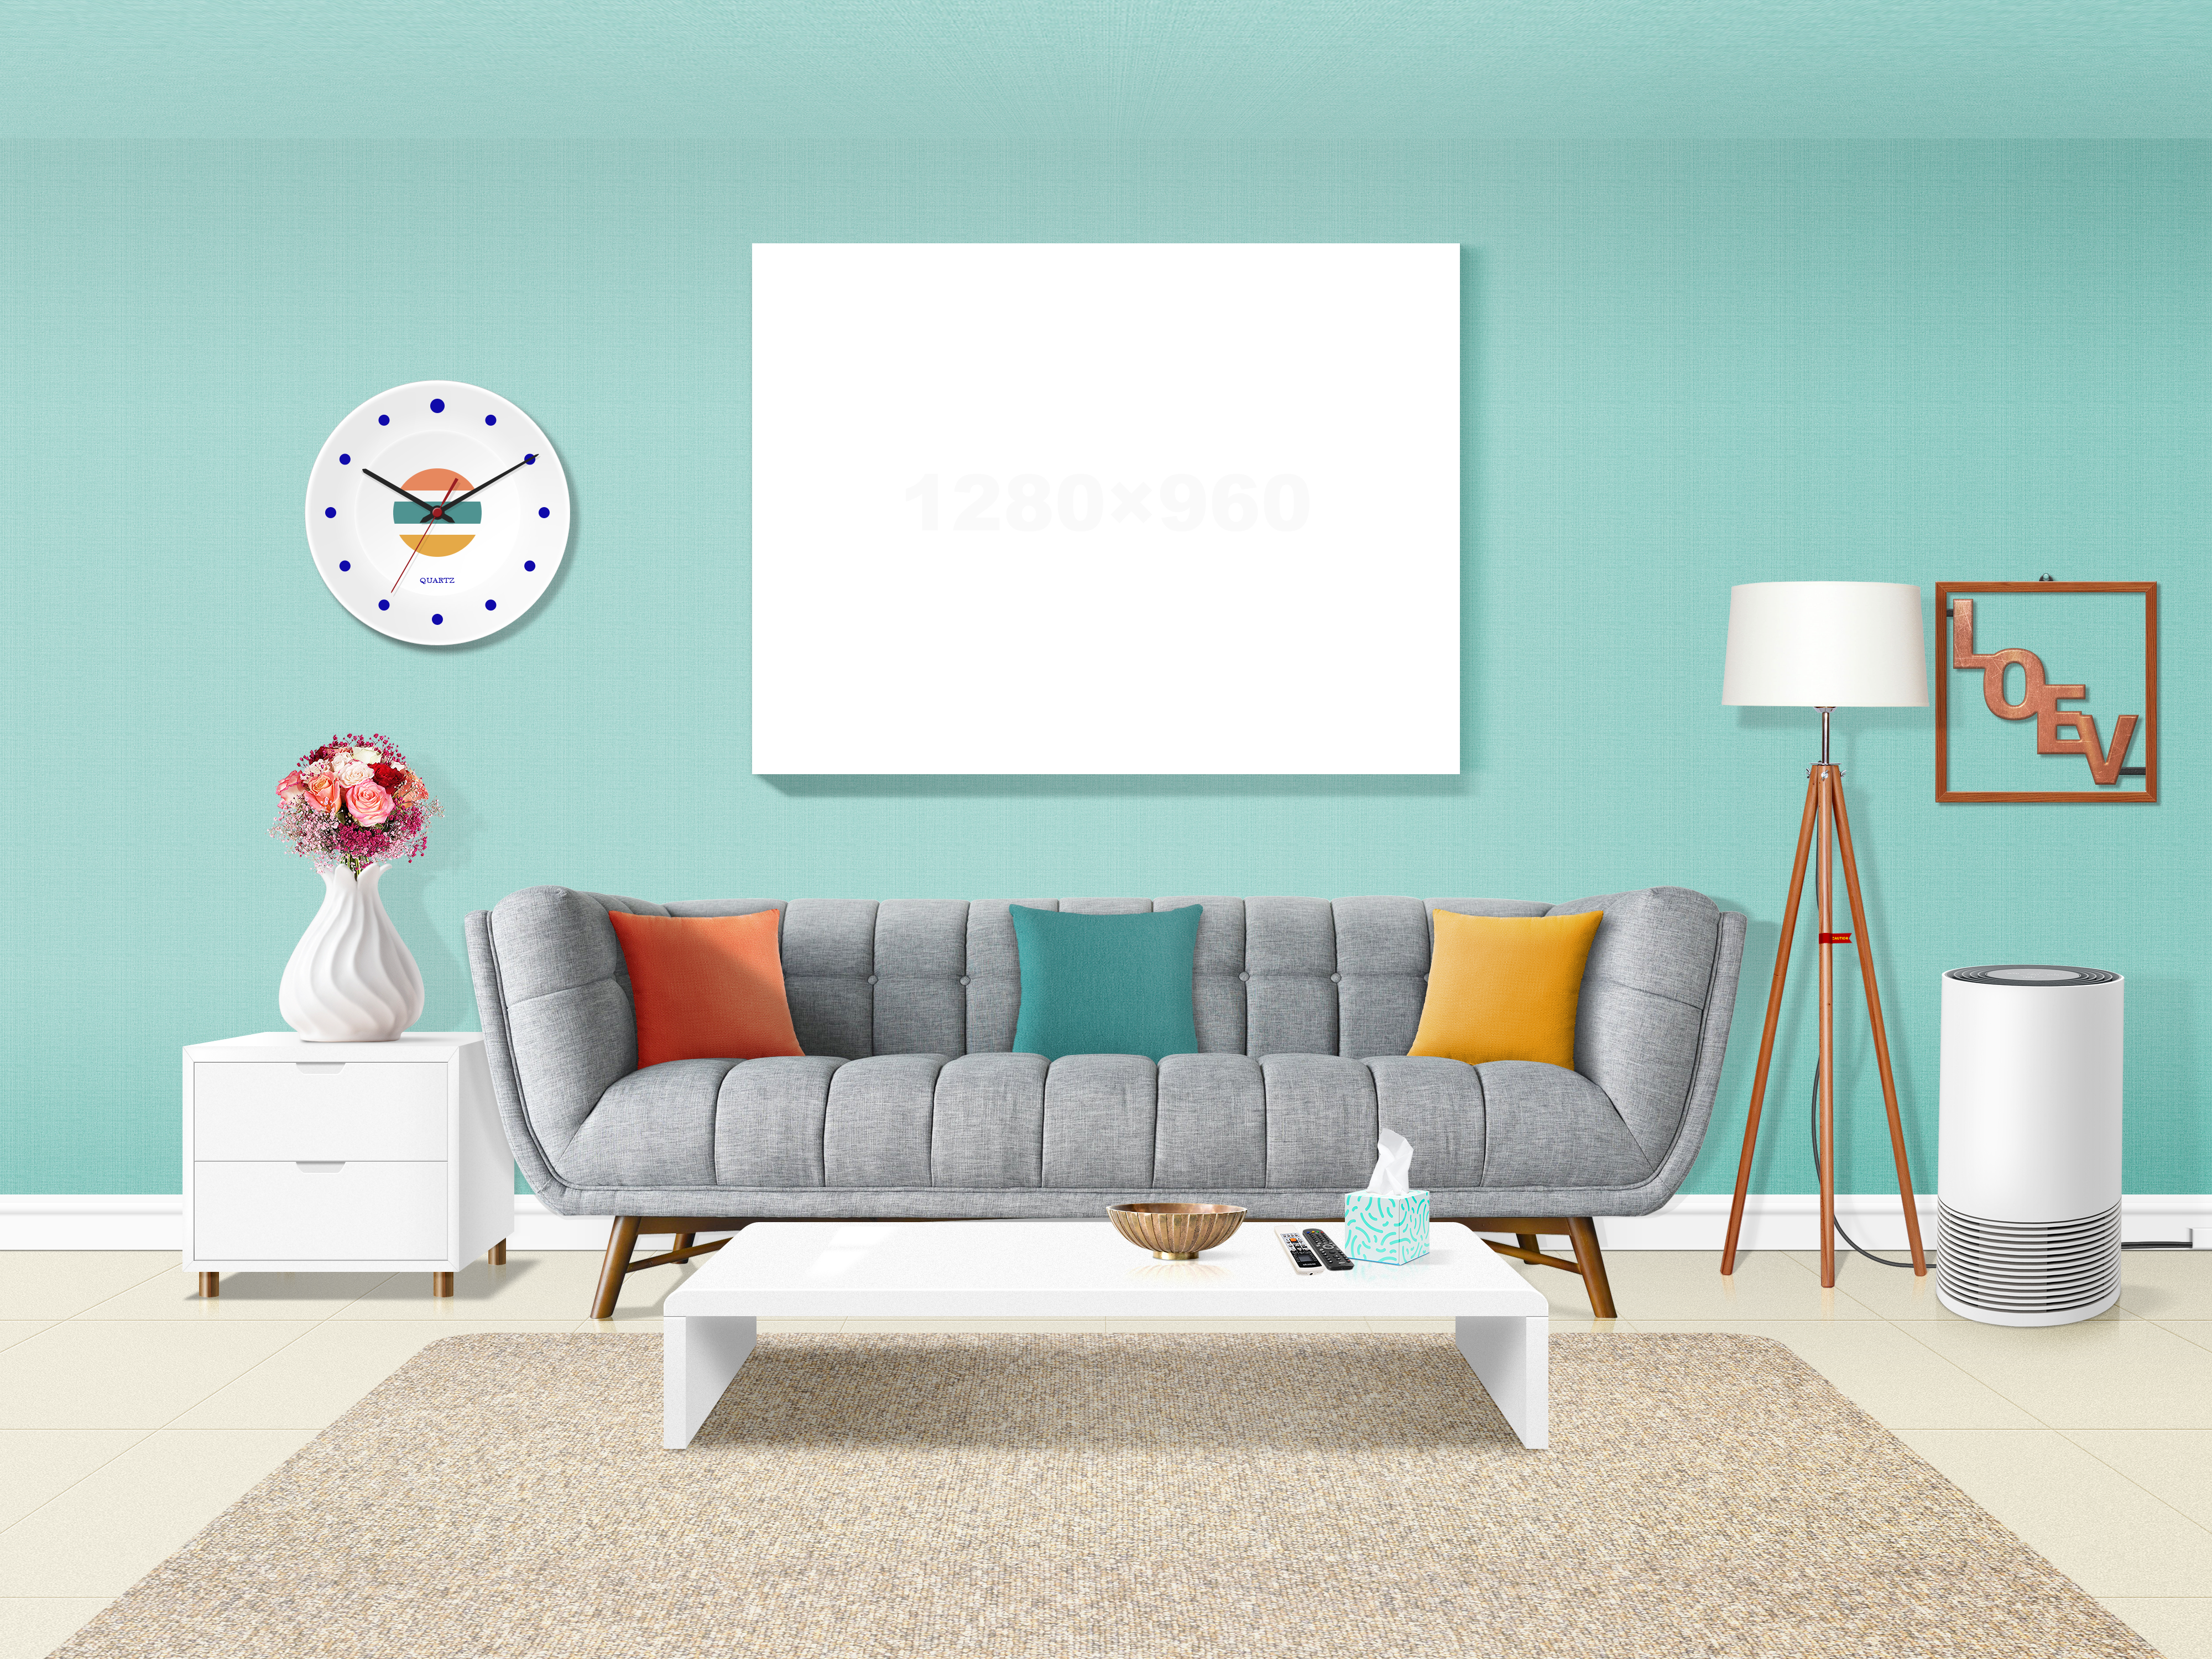 General 4000x3000 interior living rooms couch clocks room digital art